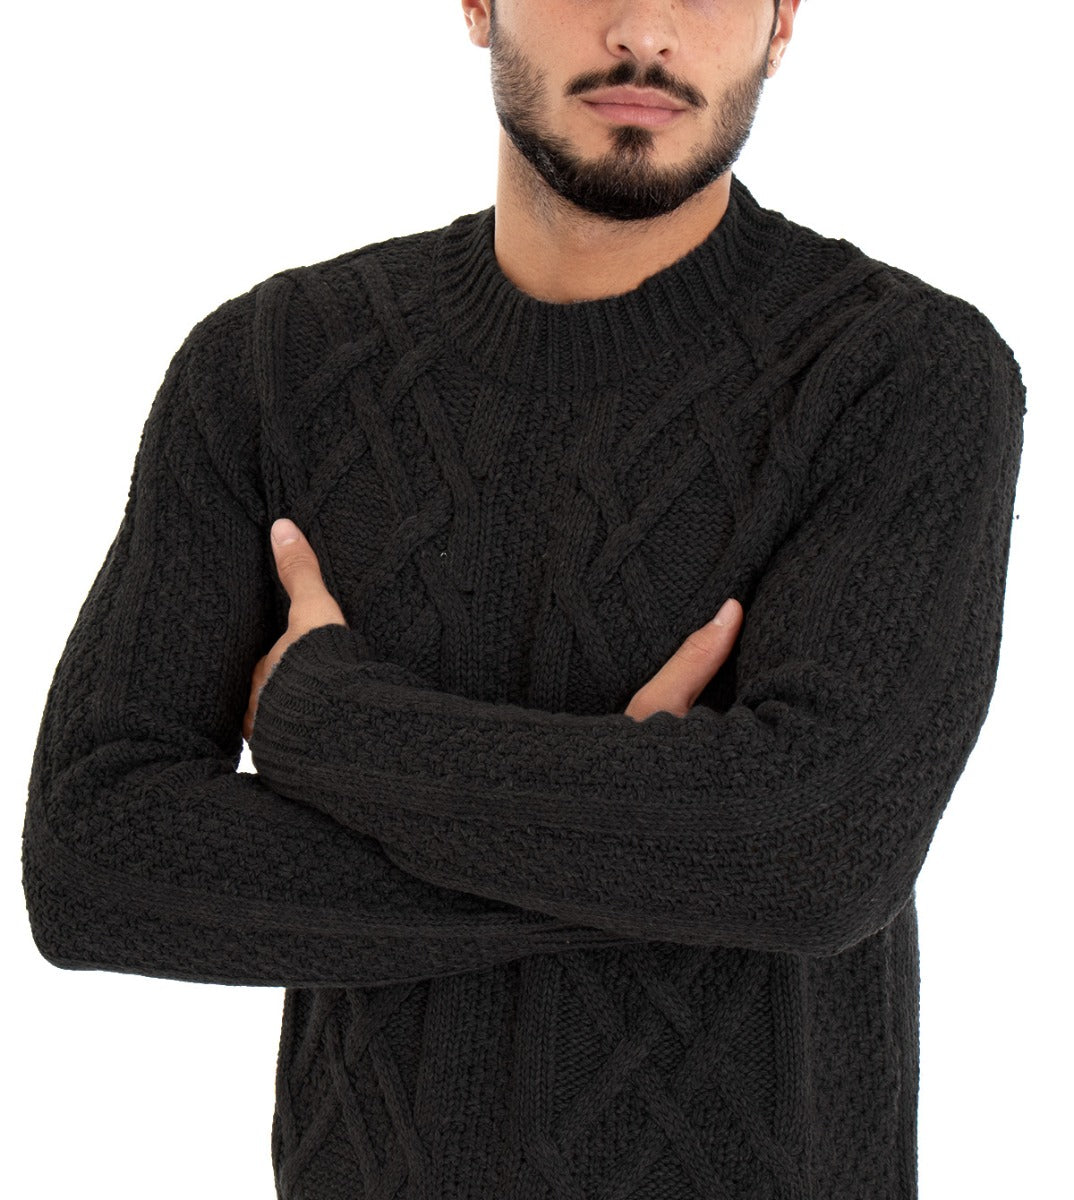 Men's Pullover Black Sweater Woven Texture Braids Pattern Crewneck Sweater GIOSAL